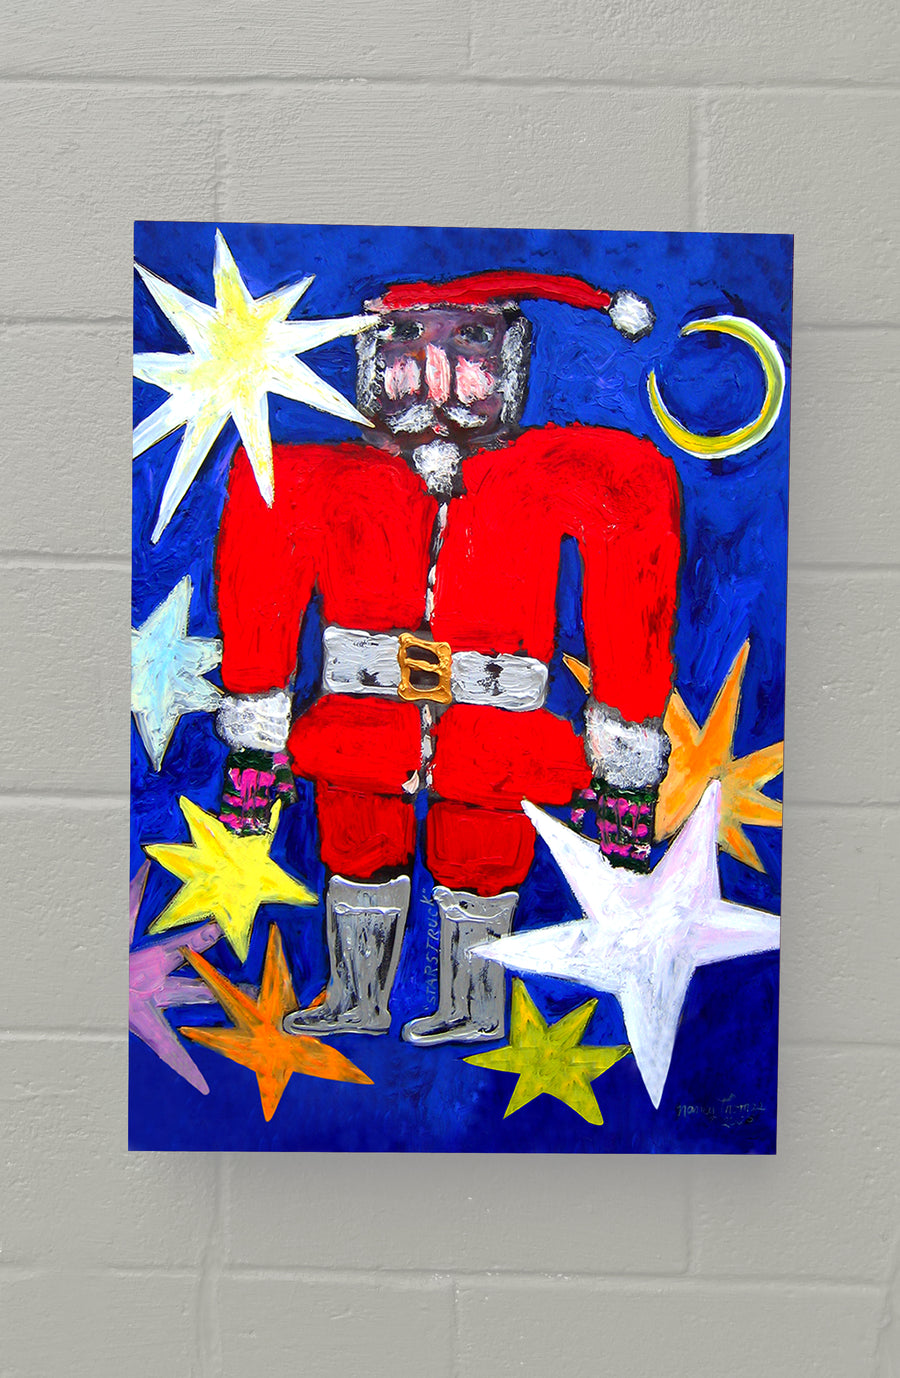 GALLERY GRAND - Star Struck Santa!